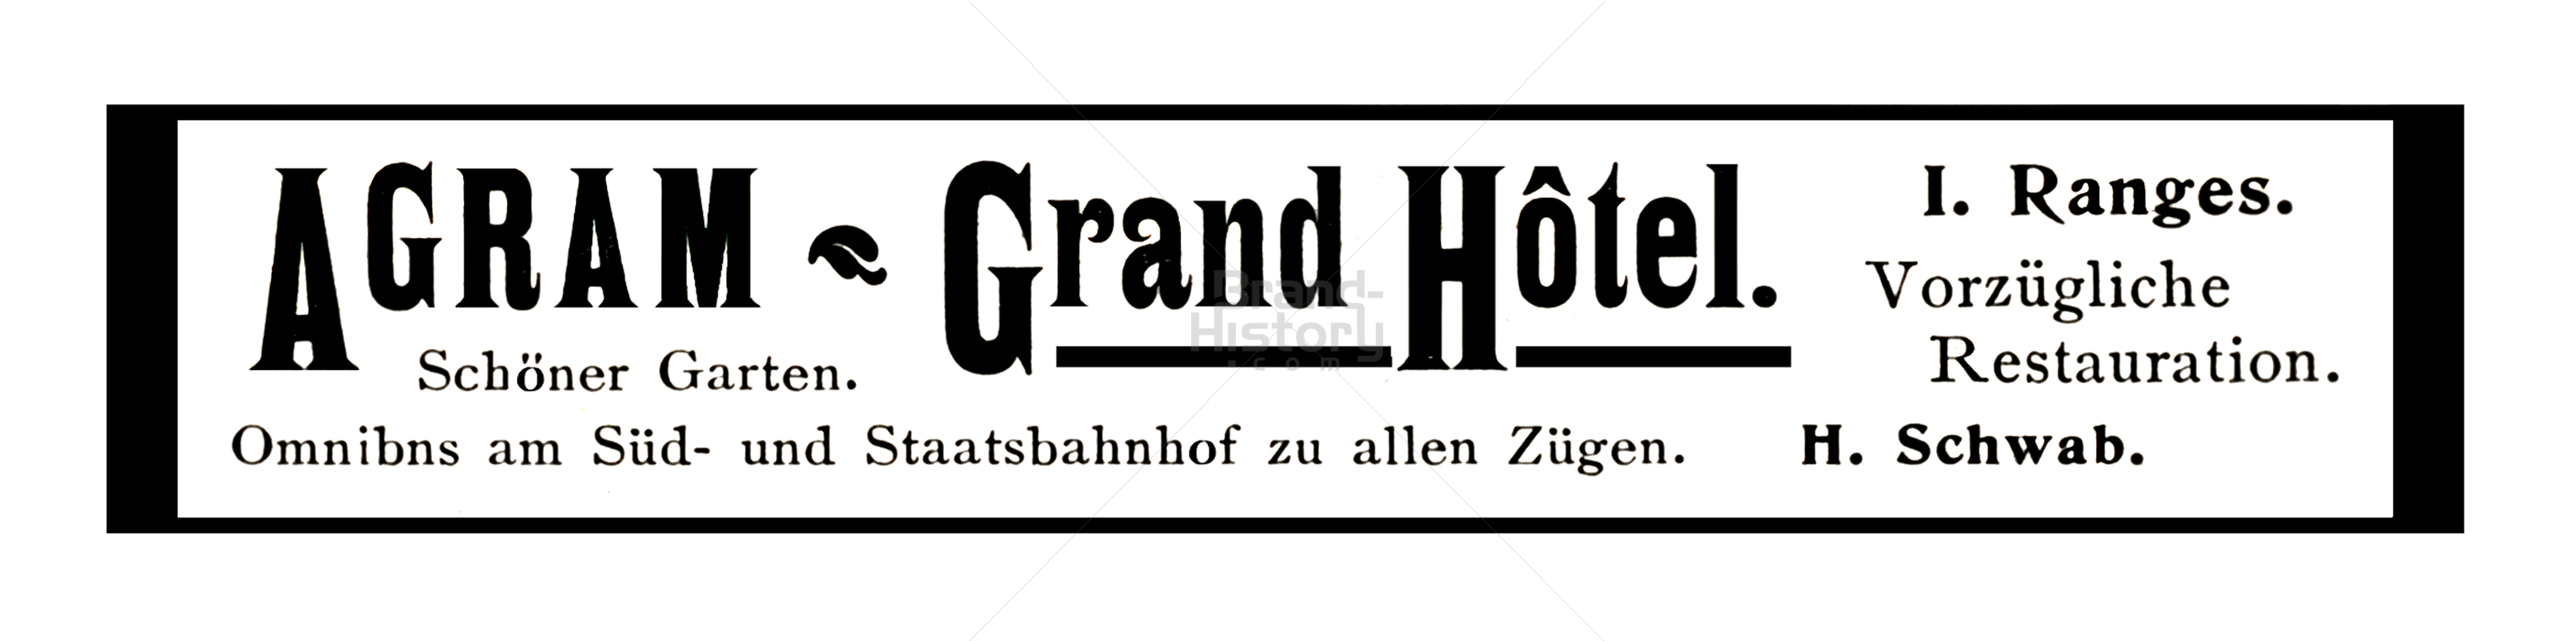 Grand Hotel, AGRAM